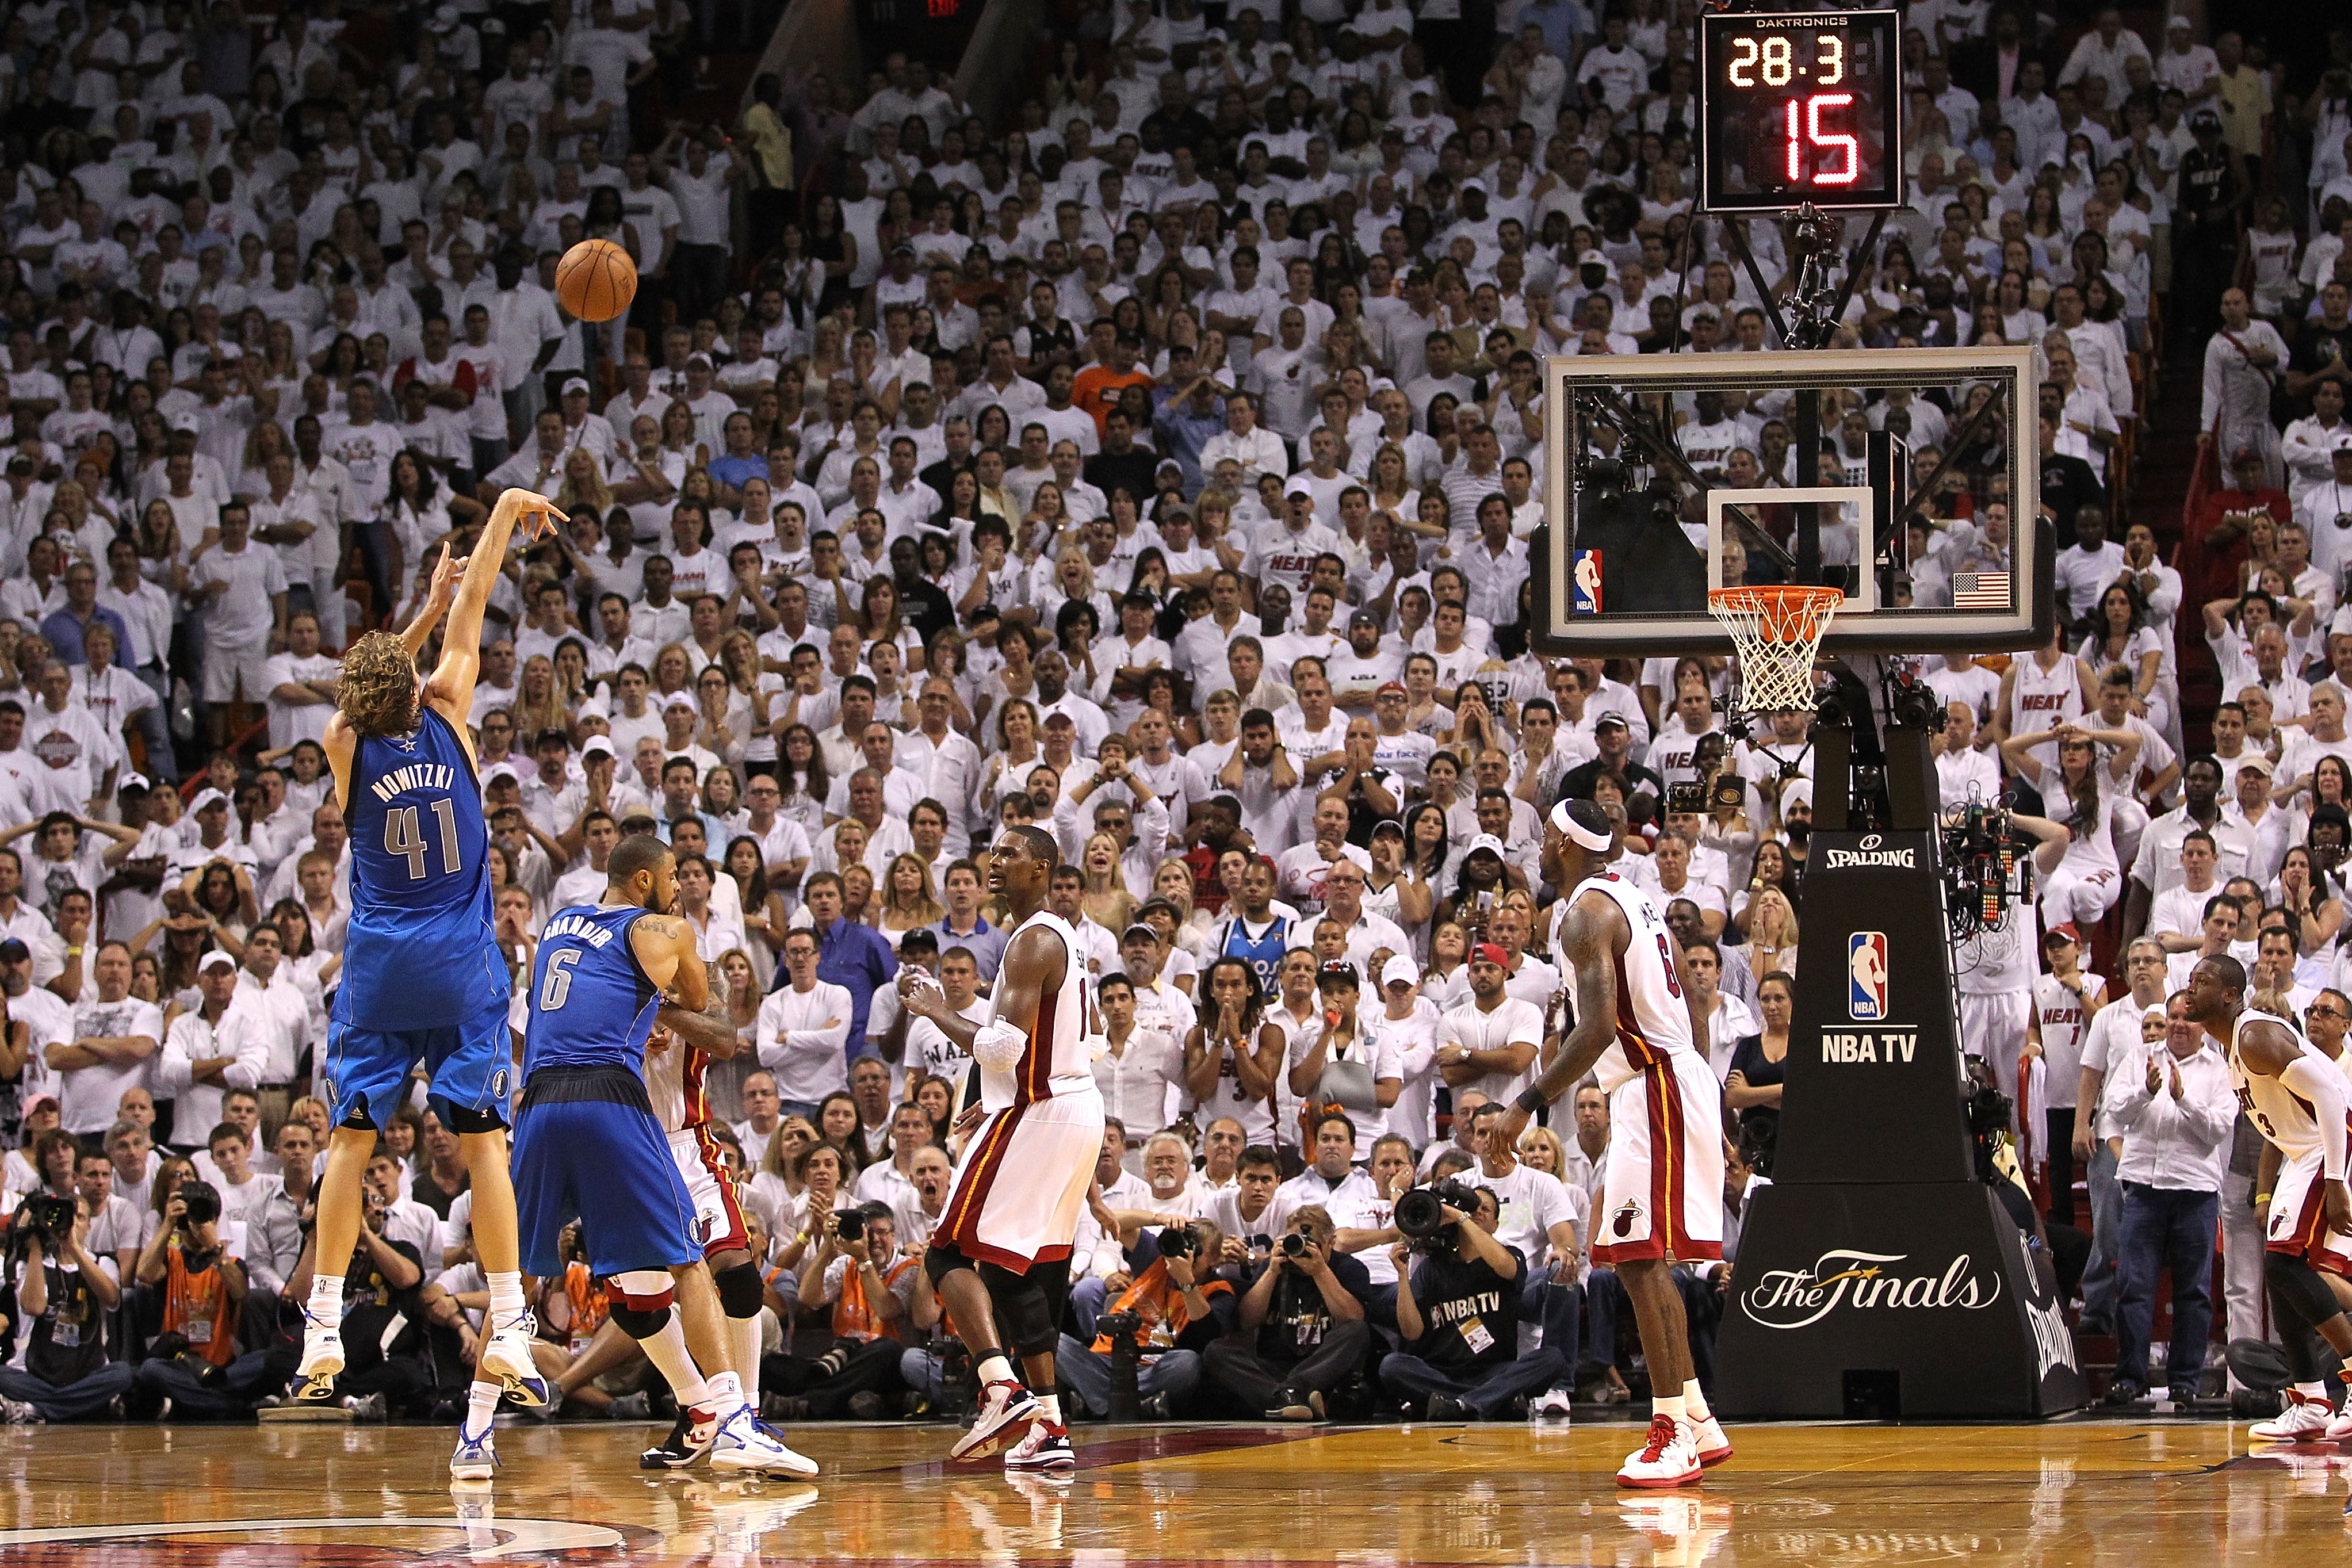 2011 NBA Finals - Wikipedia